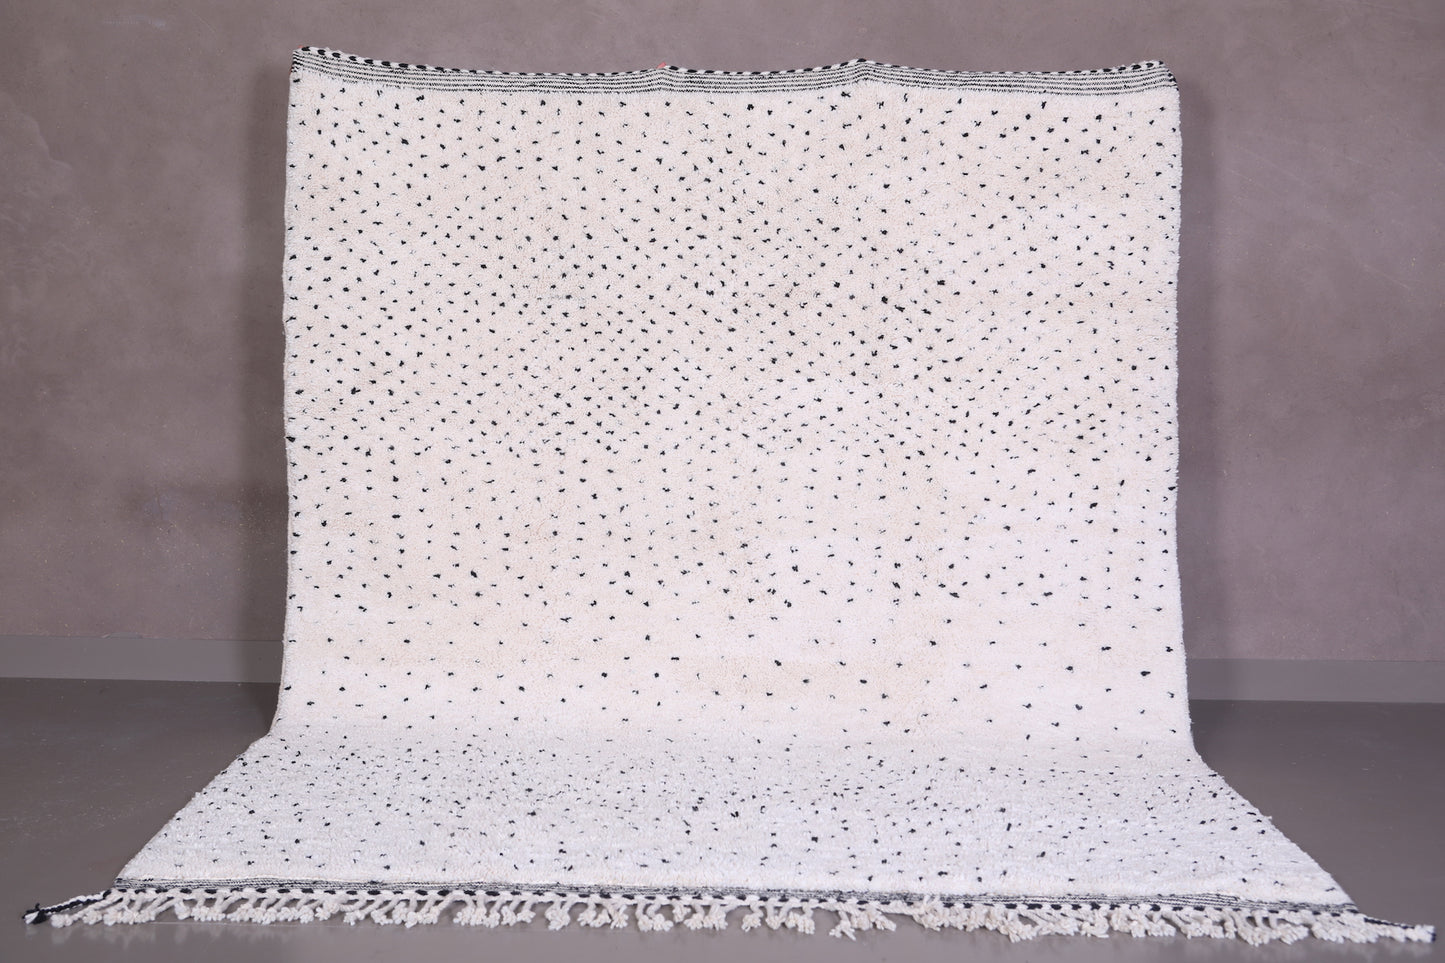 Simple Beni Rug Dots - All Wool Moroccan Carpet - Custom Rug